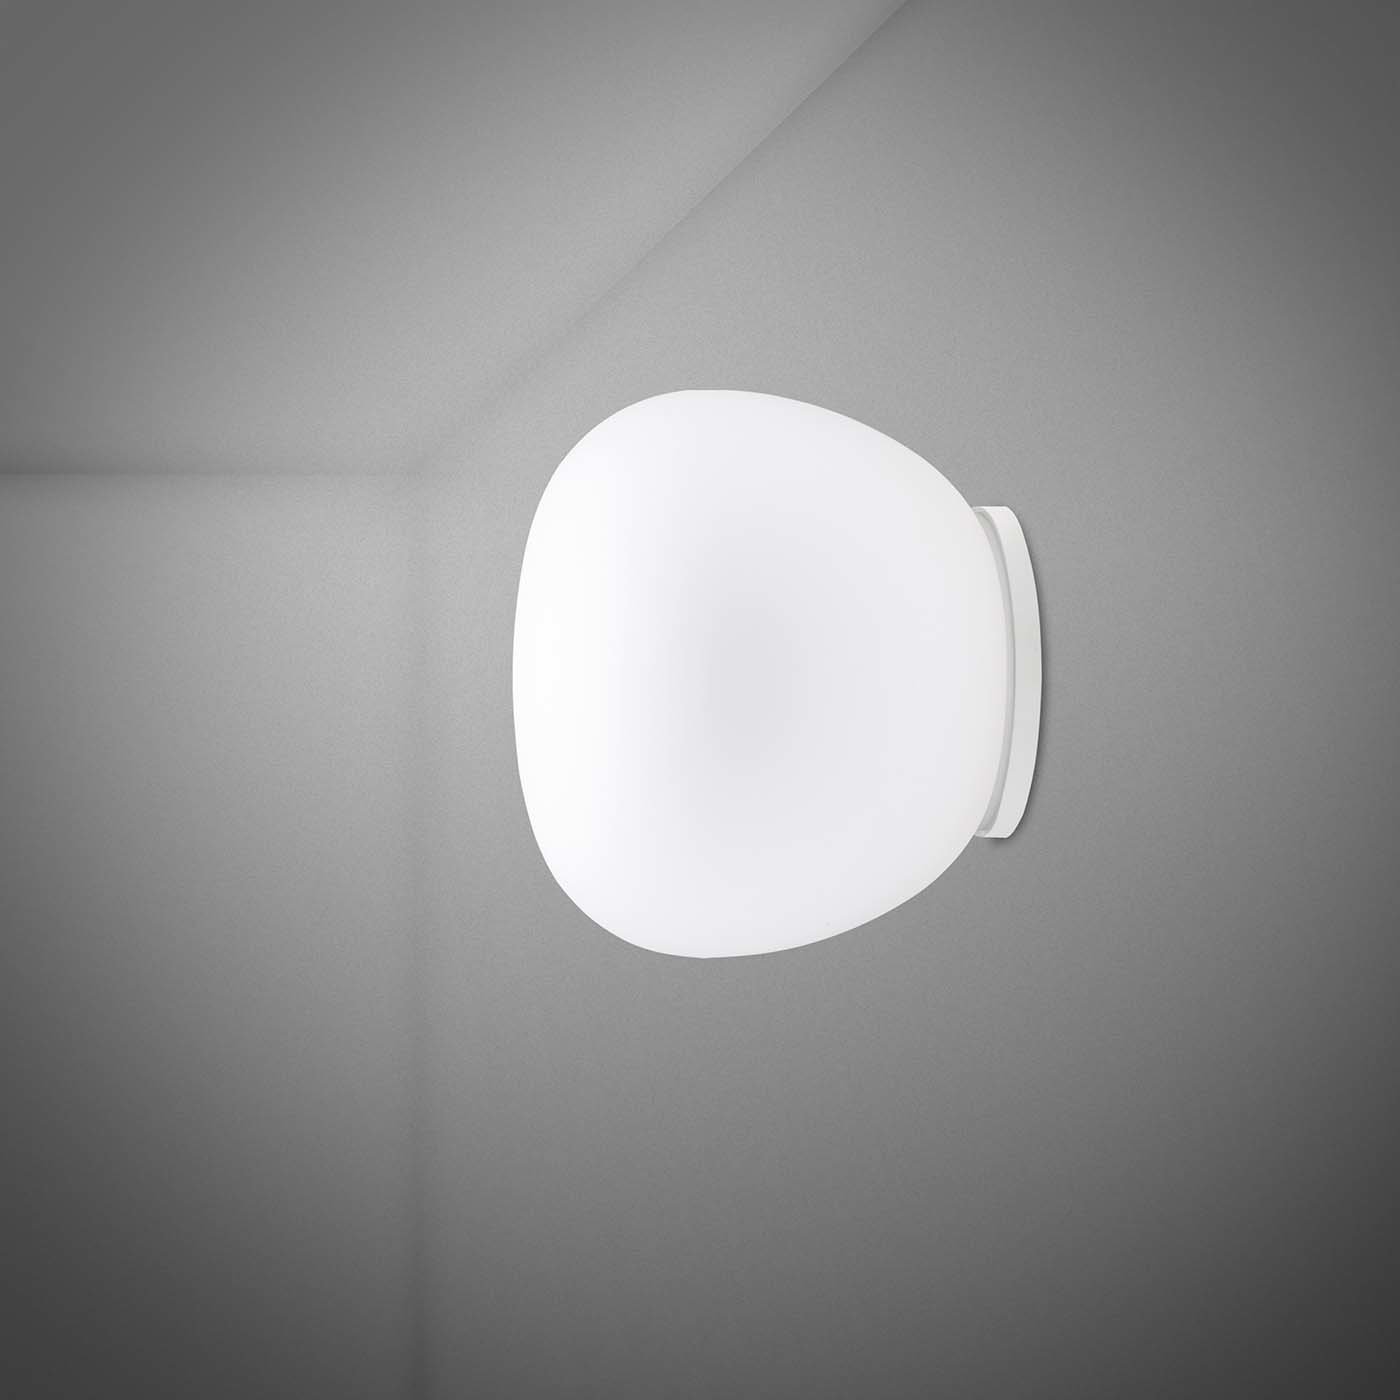 Lumi Mochi Wall/Ceiling Lamp by Saggia & Sommella - Alternative view 1